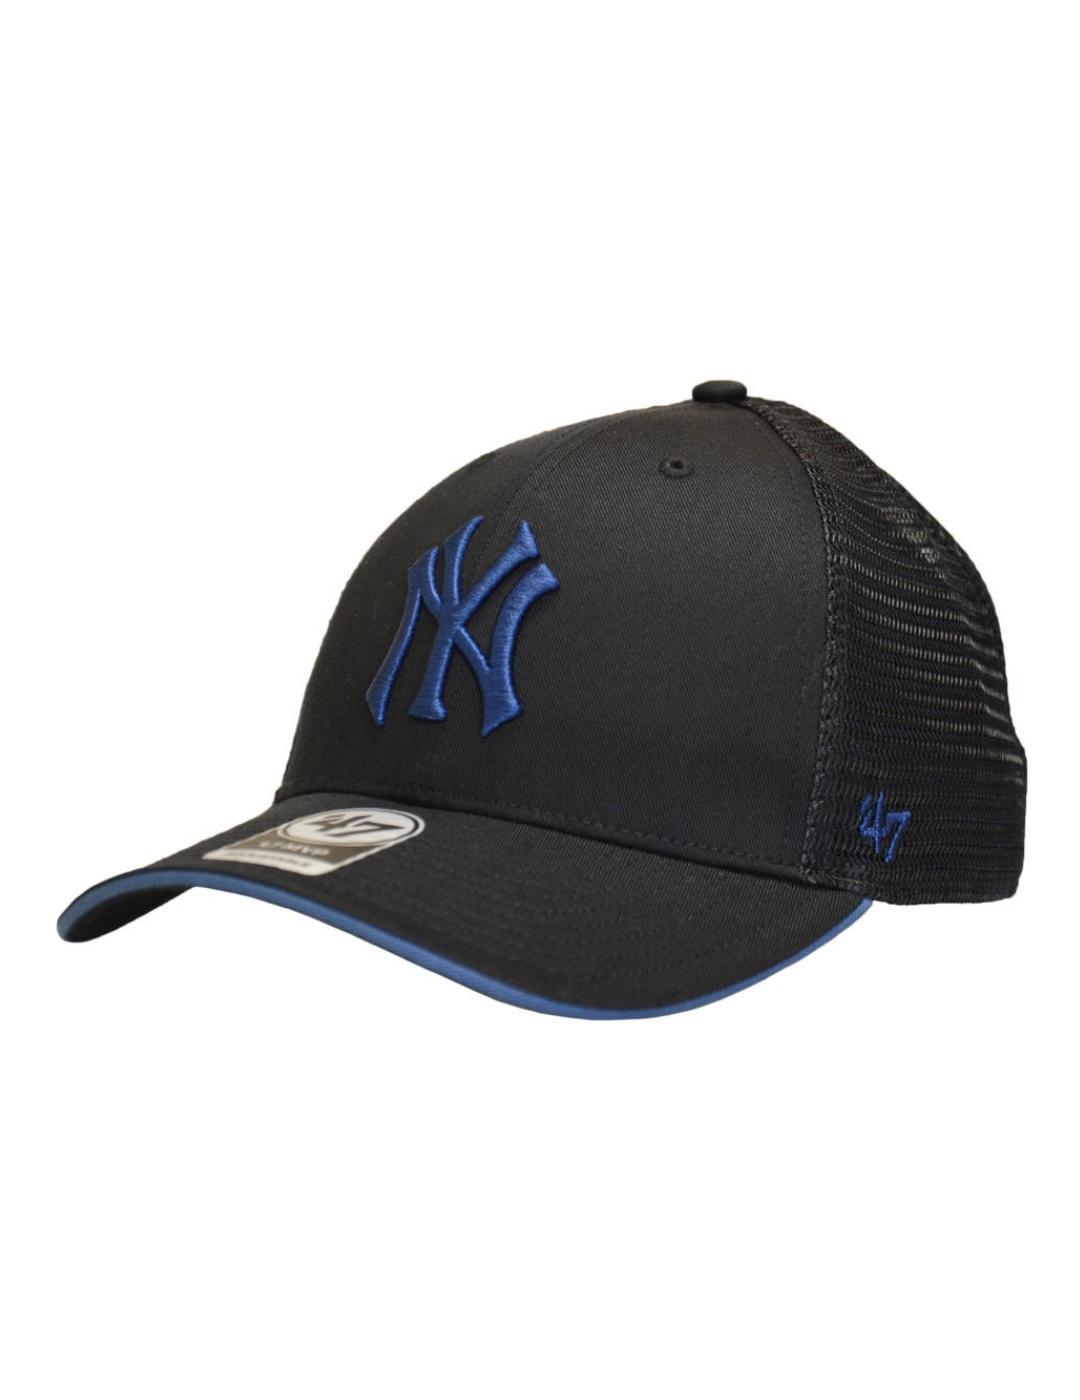 Gorra 47BRAND MLB New York Yankees.